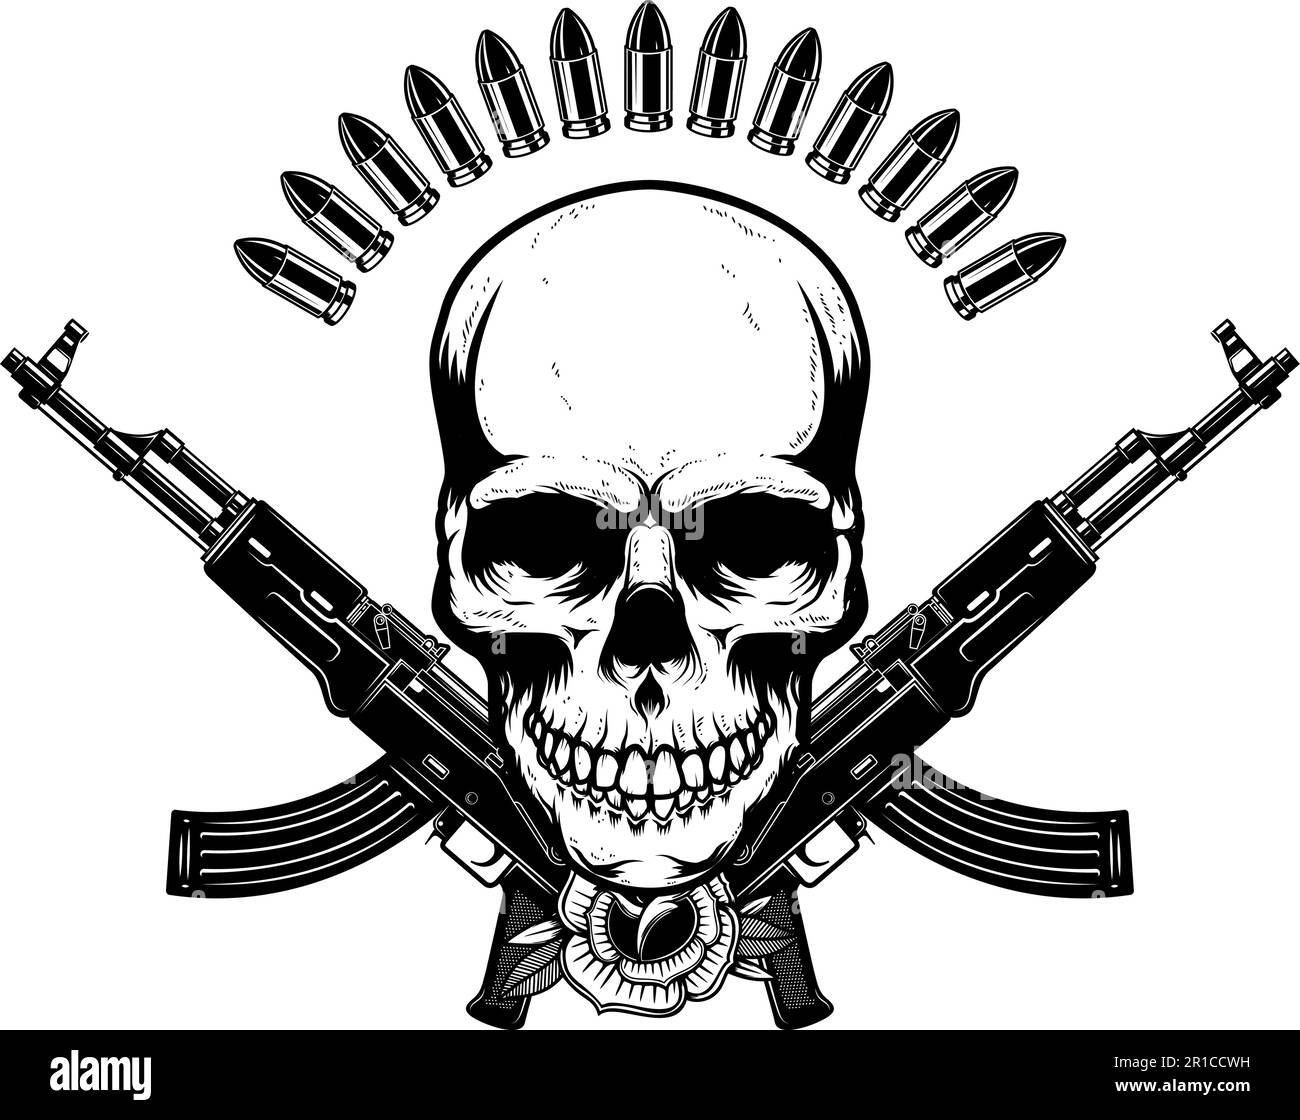 Illustration of the skull with crossed assault rifles. Design element ...